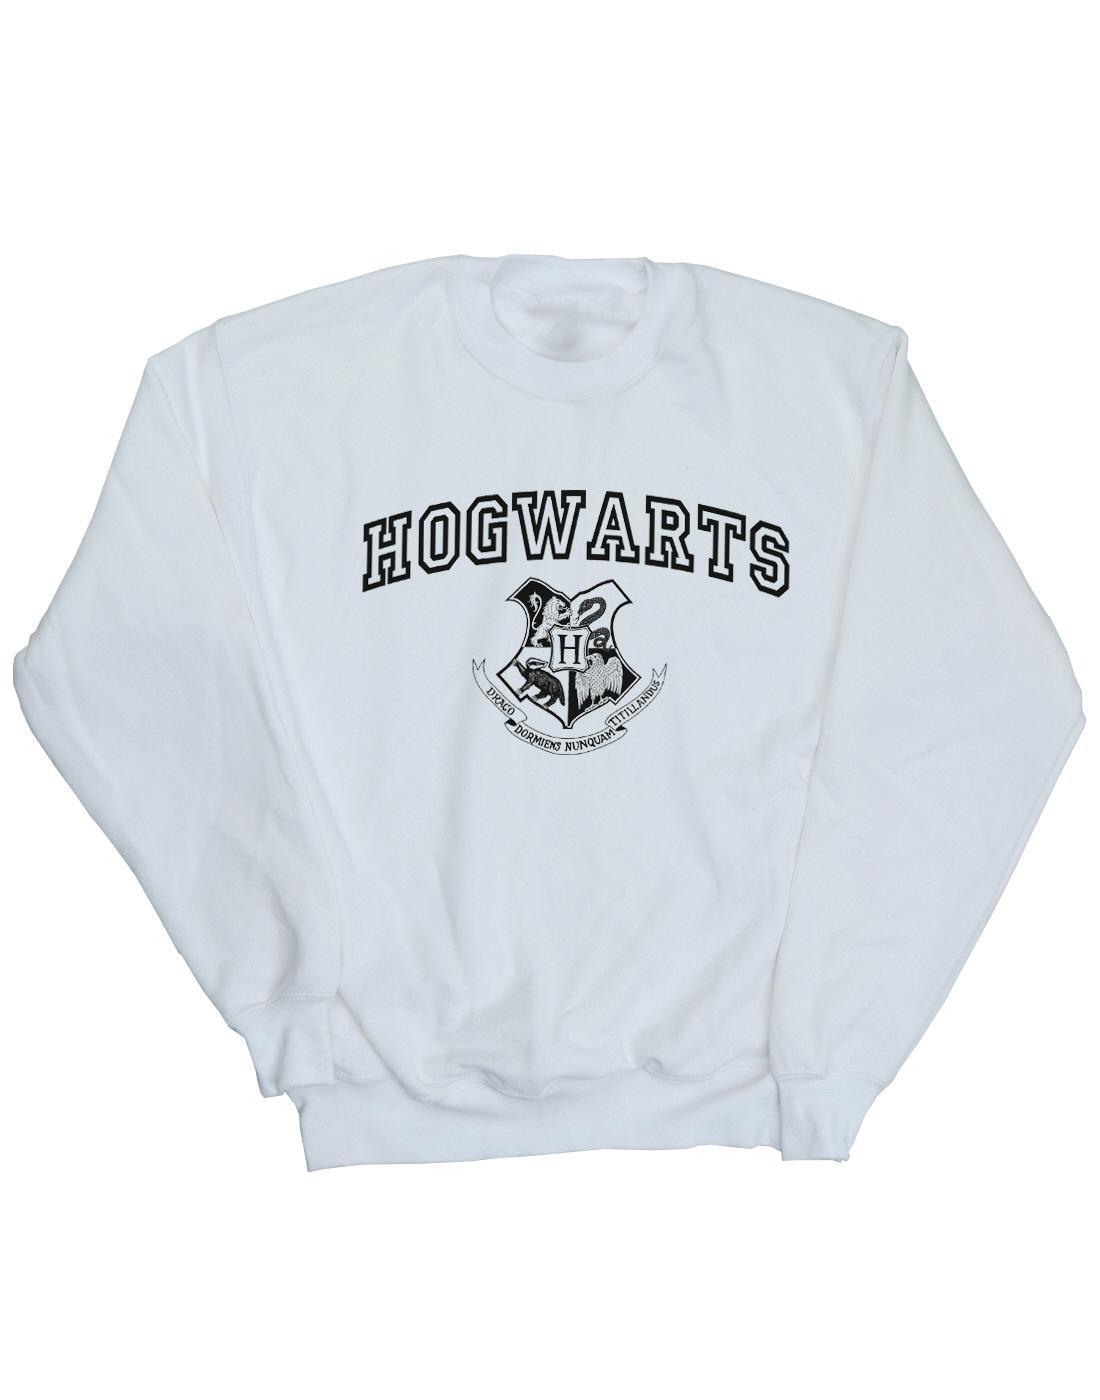 Hogwarts Crest Sweatshirt Herren Weiss S